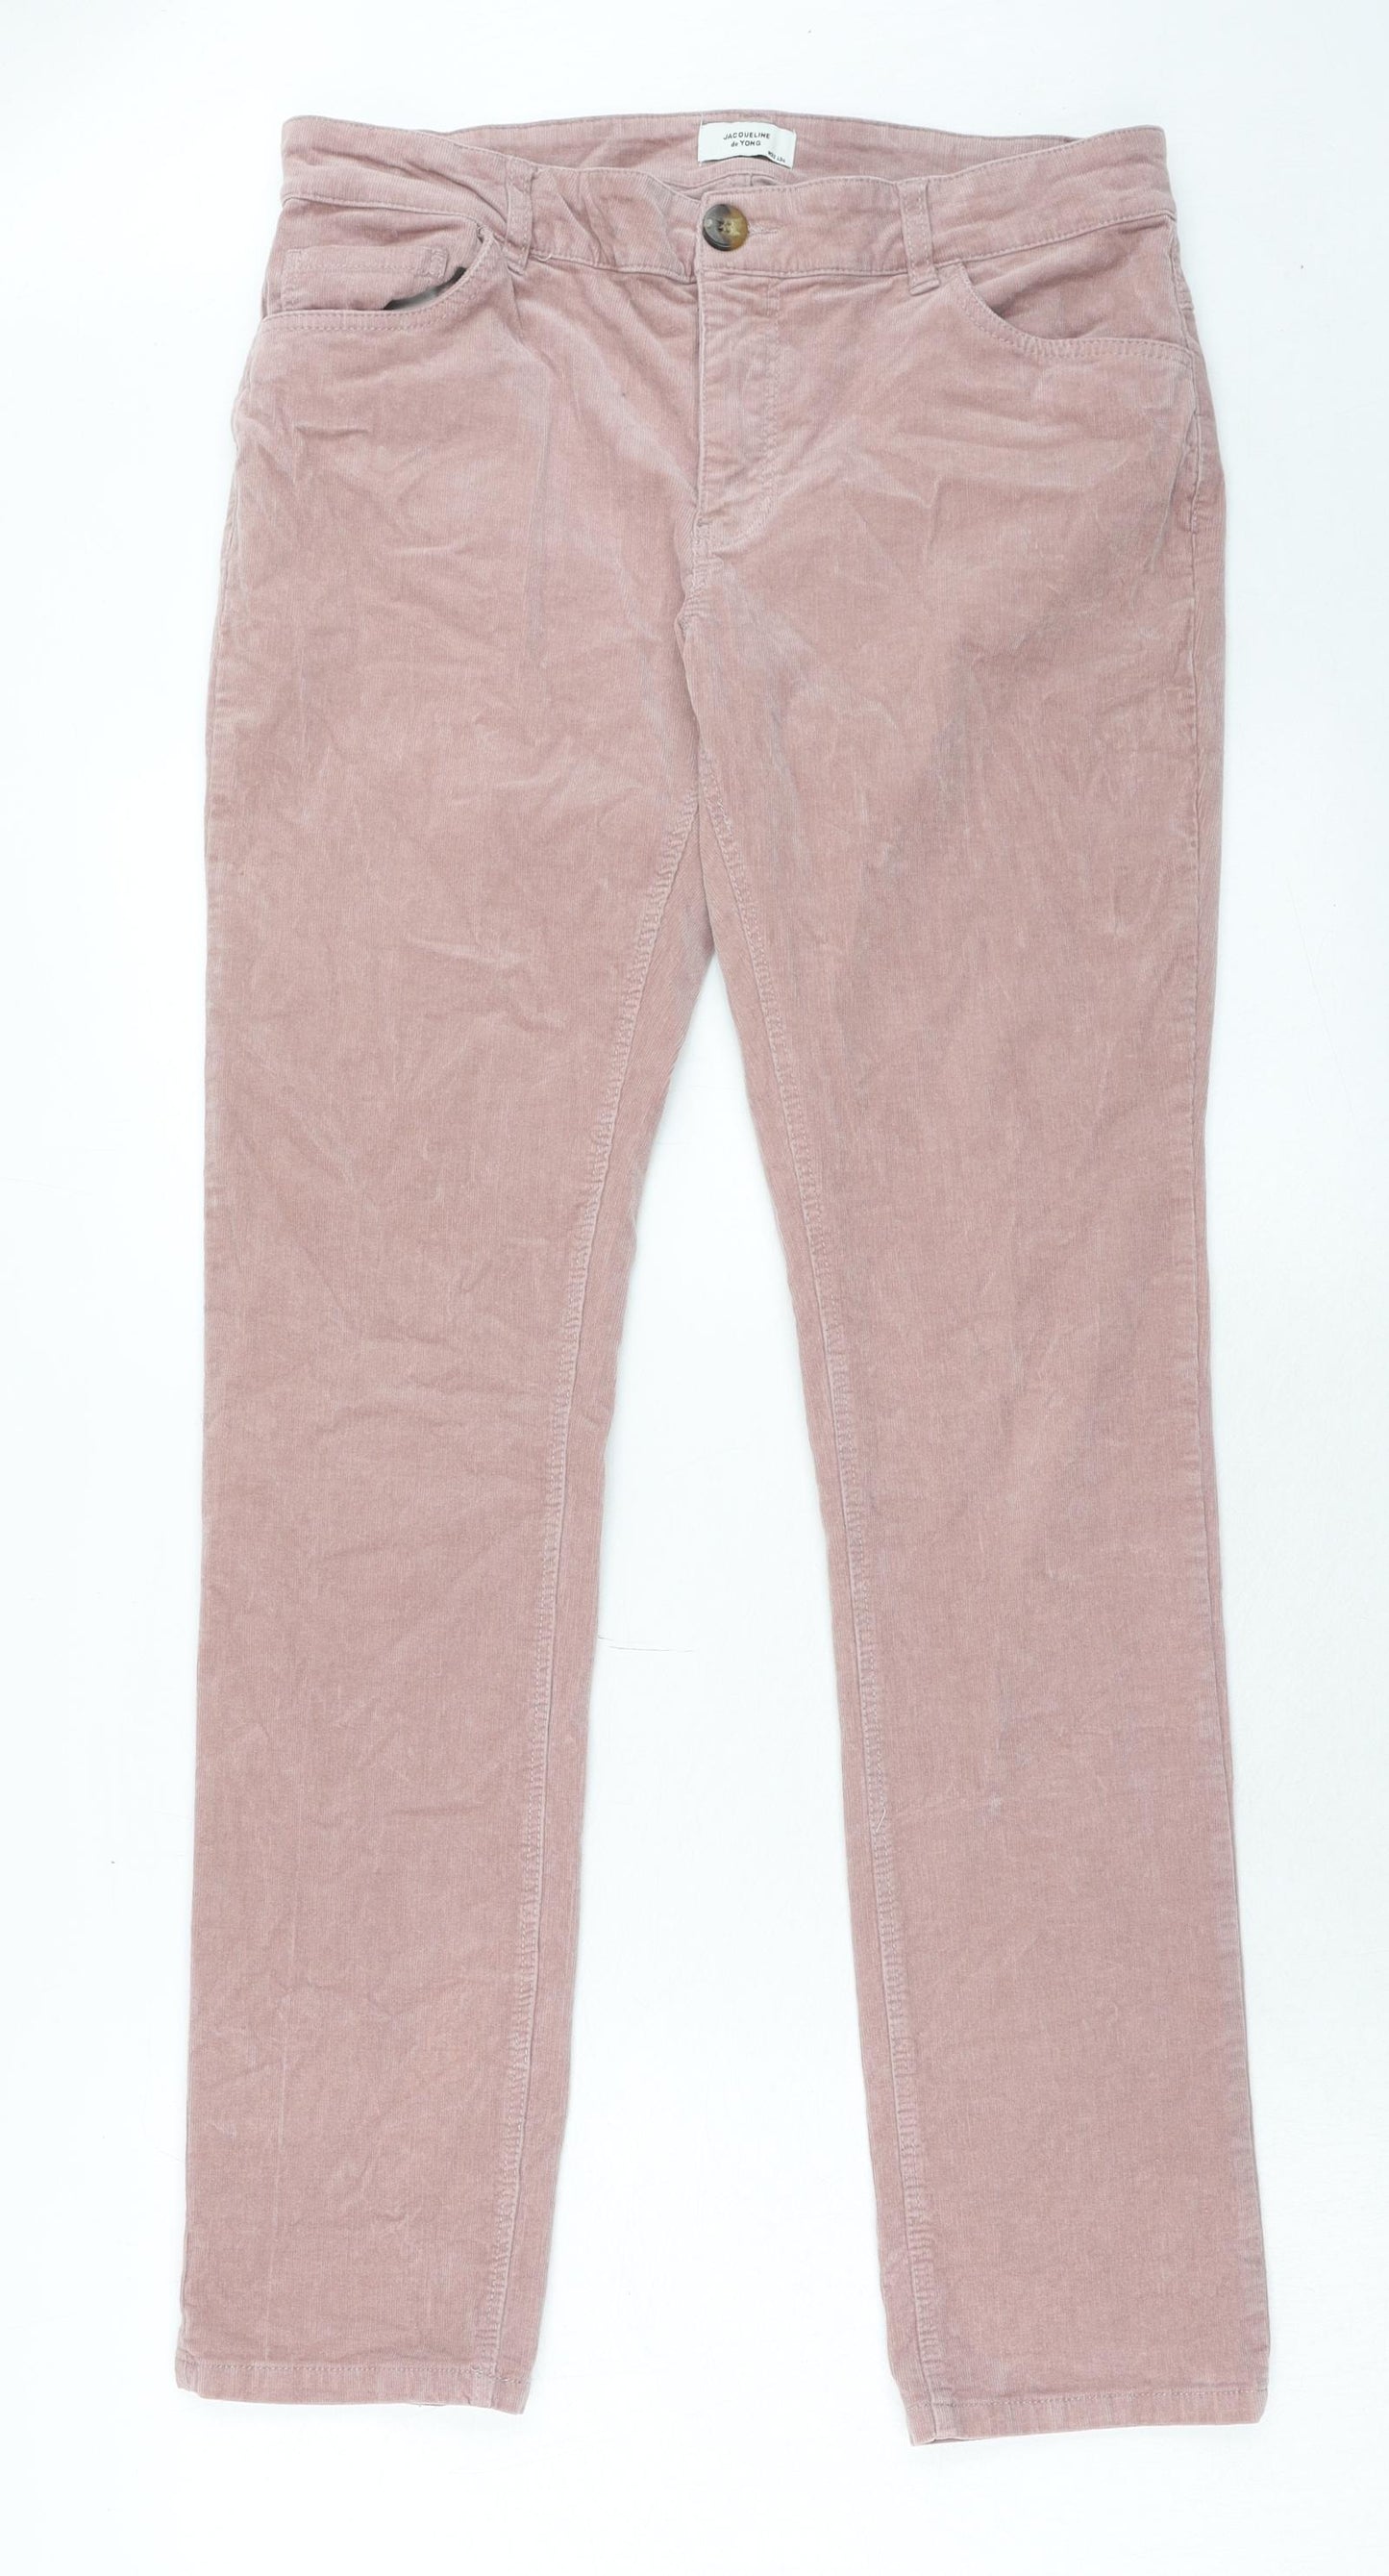 Jacqueline De Yong Womens Pink Cotton Trousers Size 32 in L34 in Regular Zip